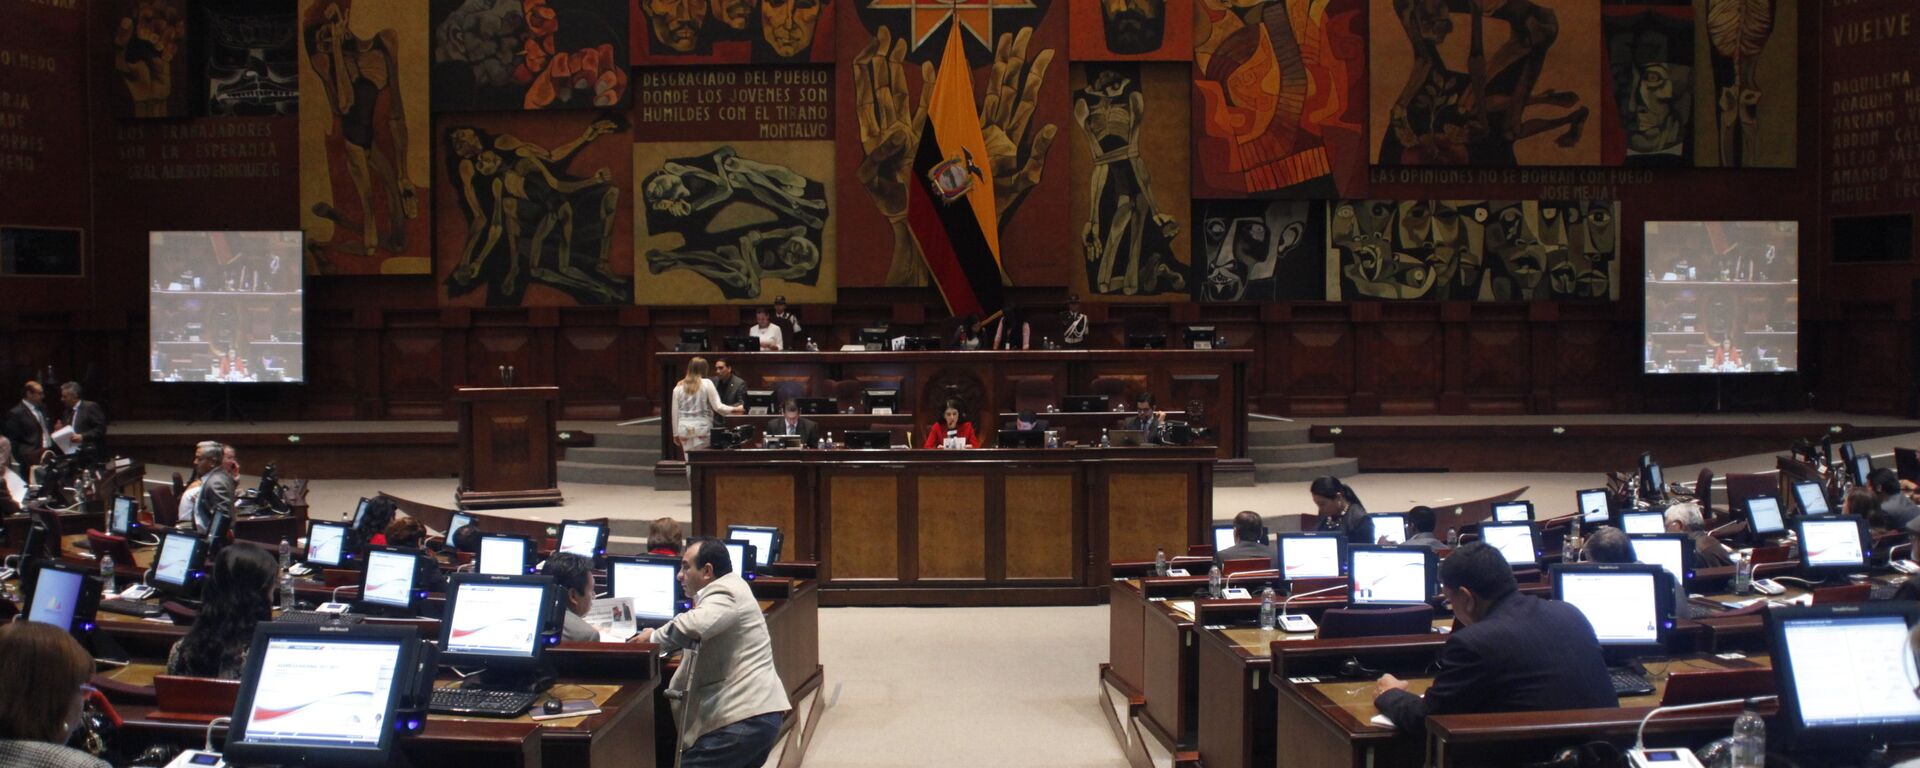 La Asamblea Nacional de Ecuador (archivo) - Sputnik Mundo, 1920, 11.10.2021